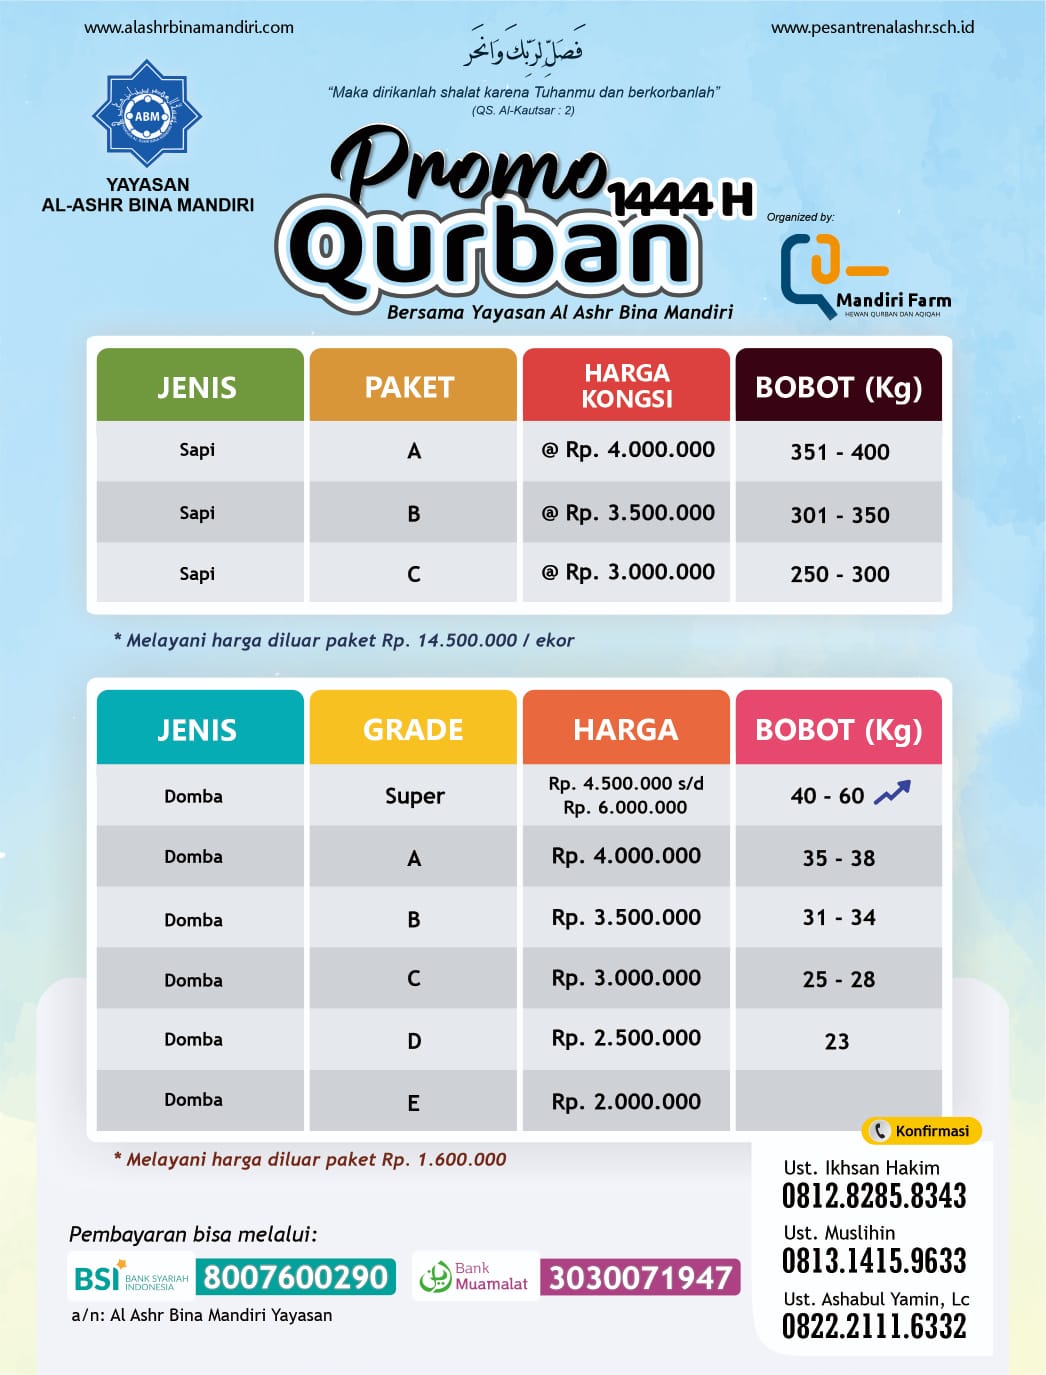 Qurban 1444H Bersama Yayasan Al-Ashr Bina Mandiri